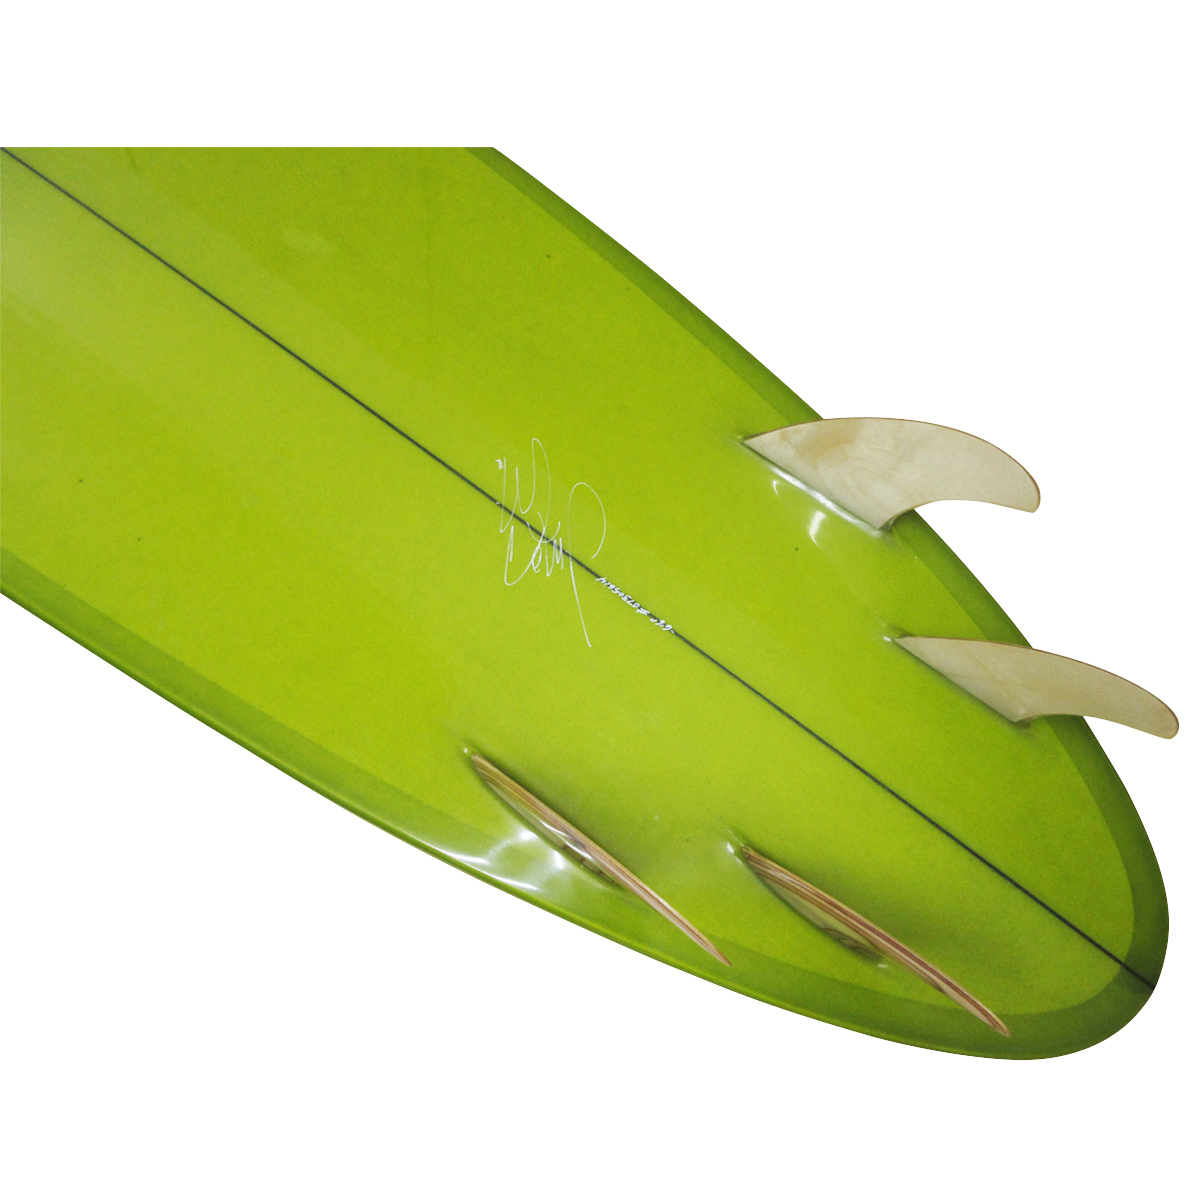 Mccallum Surfboards / Upside Down Egg 6'6 Shaped By Jeff Mccallum